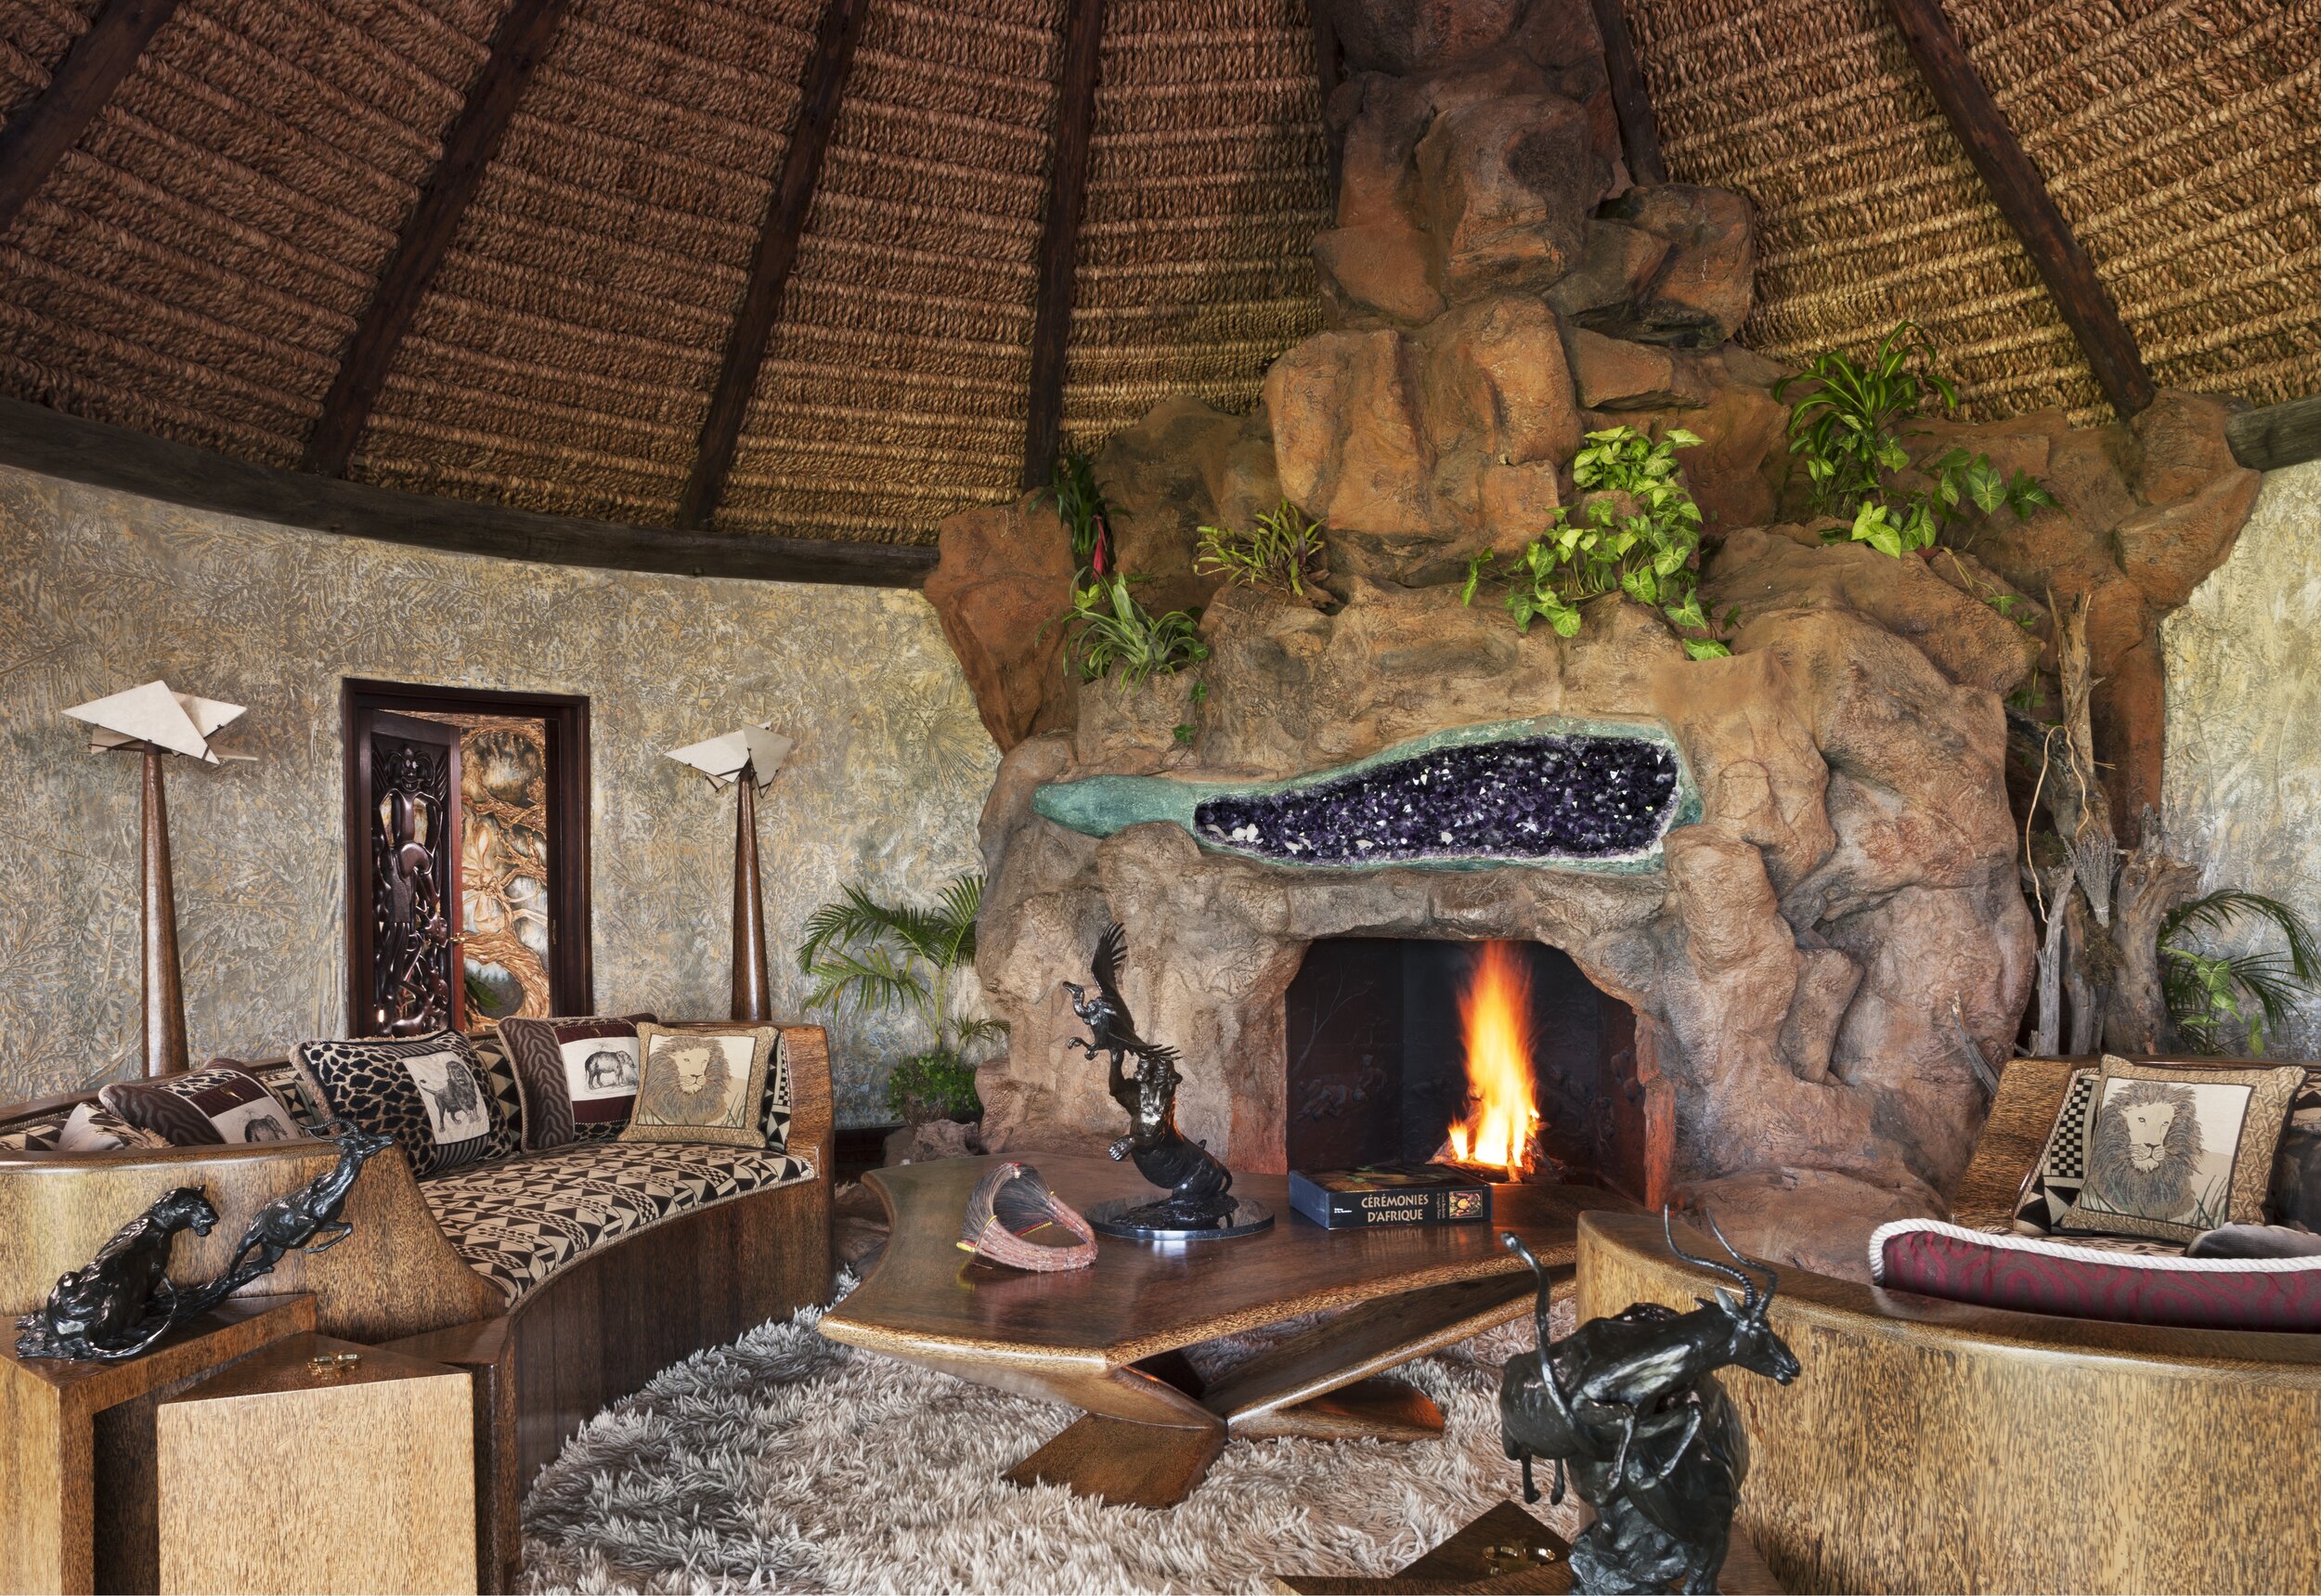 H-Kenya-Ol Jogi- Simba Cottage Fireplace.jpg